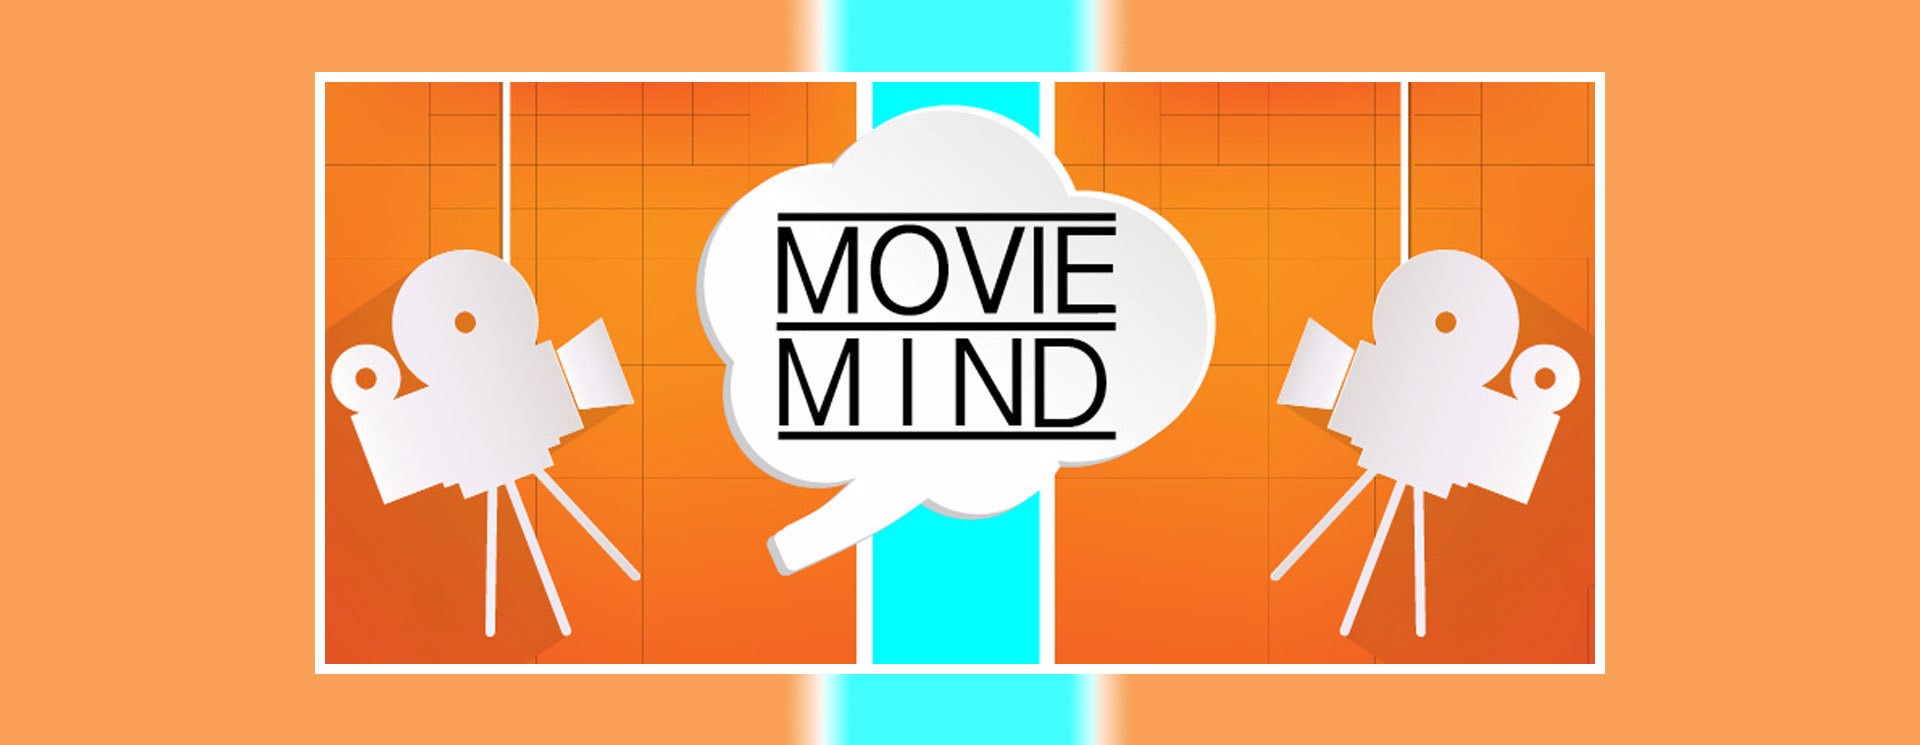 movie mind